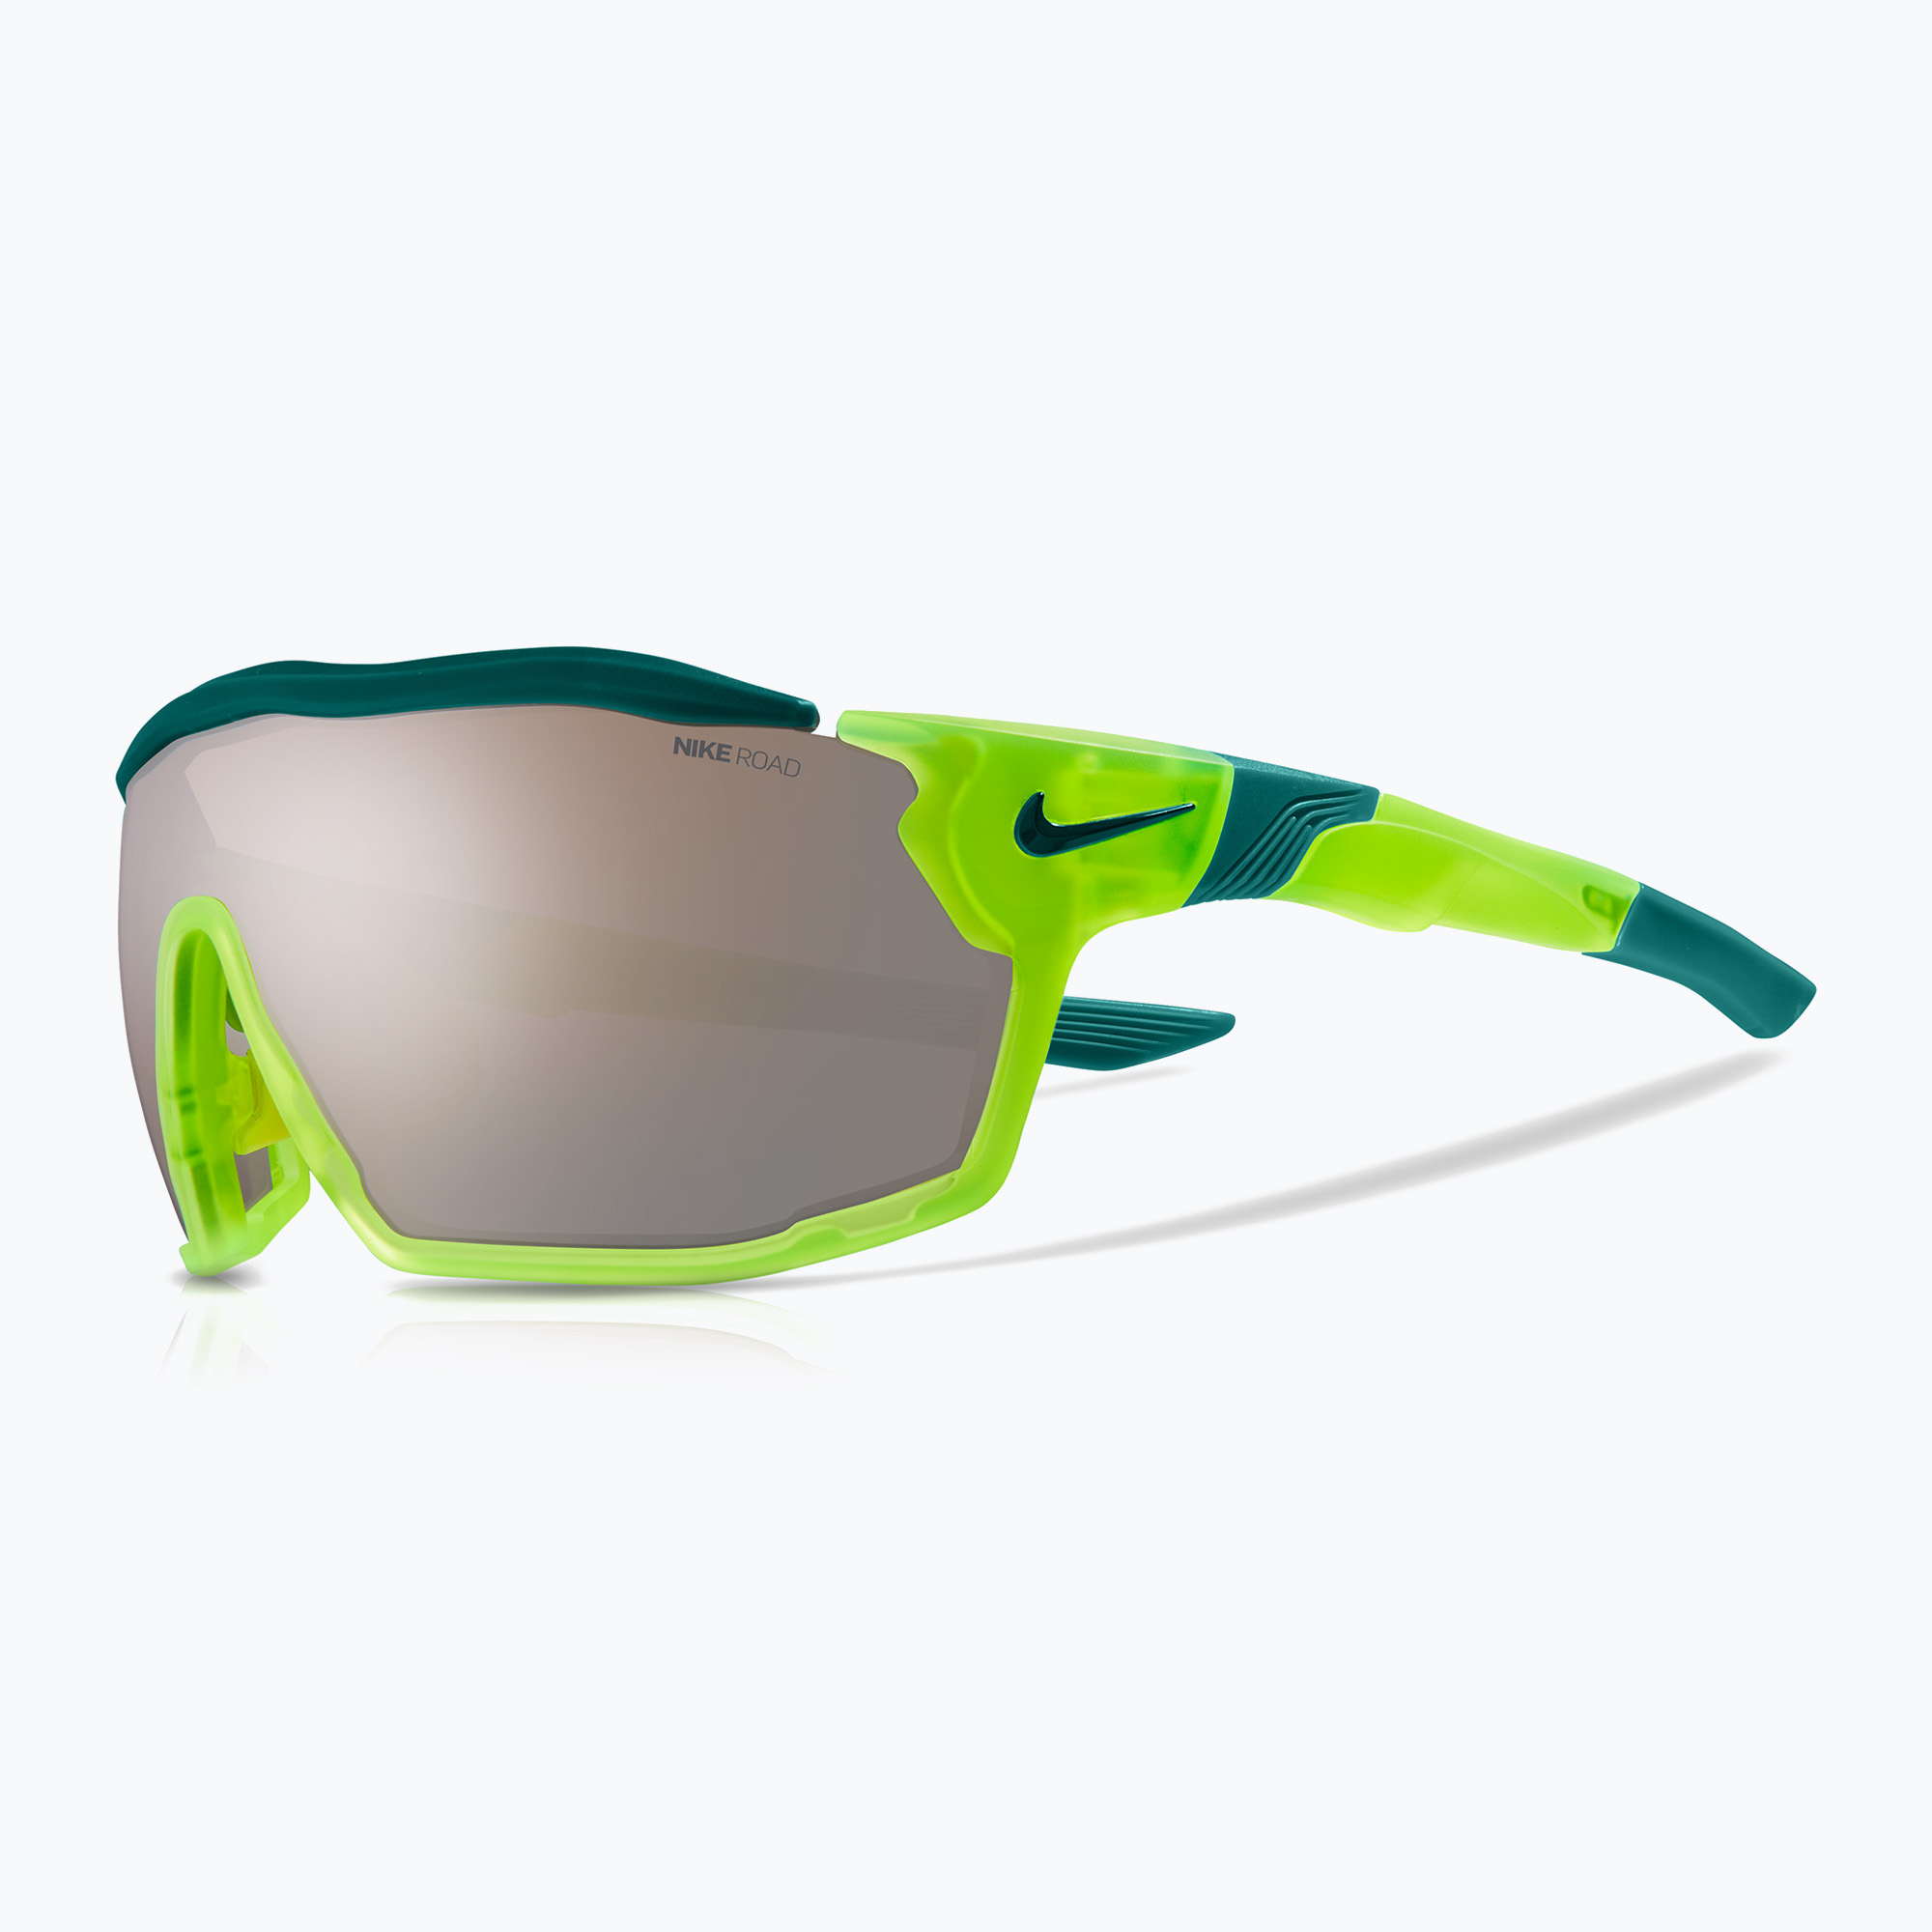 Слънчеви очила Nike Show X Rush, матови, цвят волт/хром с огледало